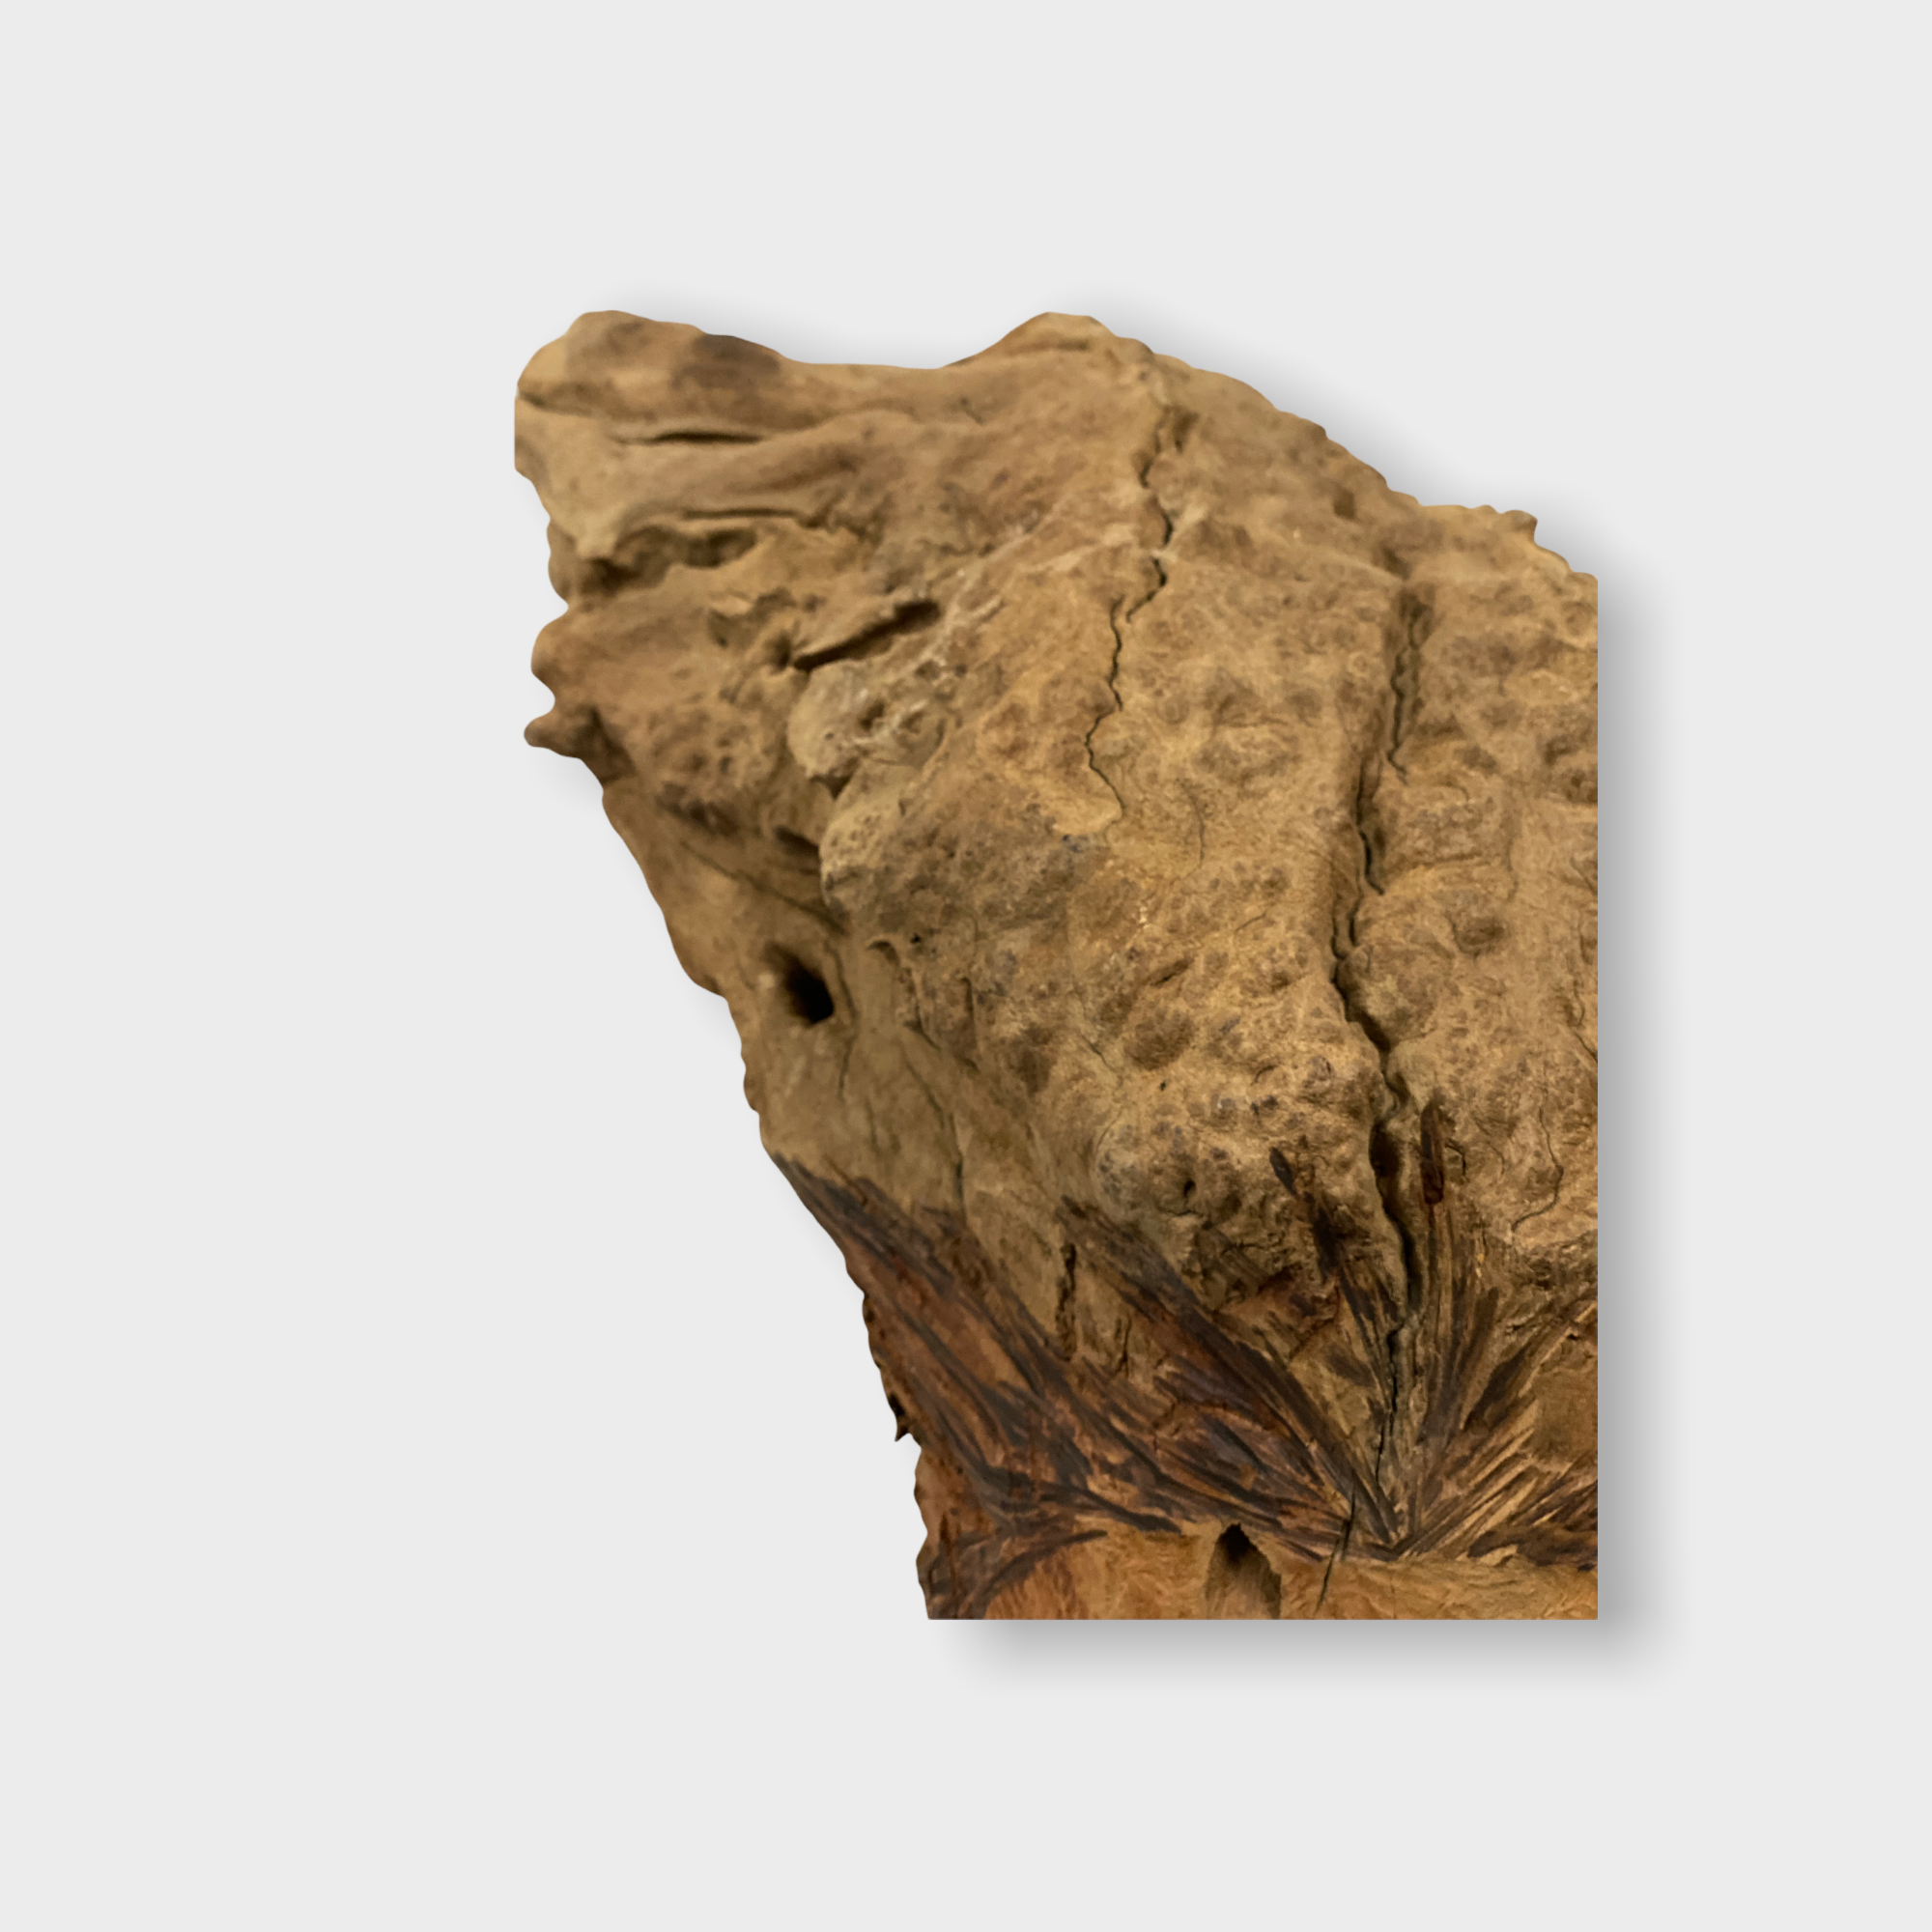 Hand Carved Head - Zimbabwe - large (152.1)